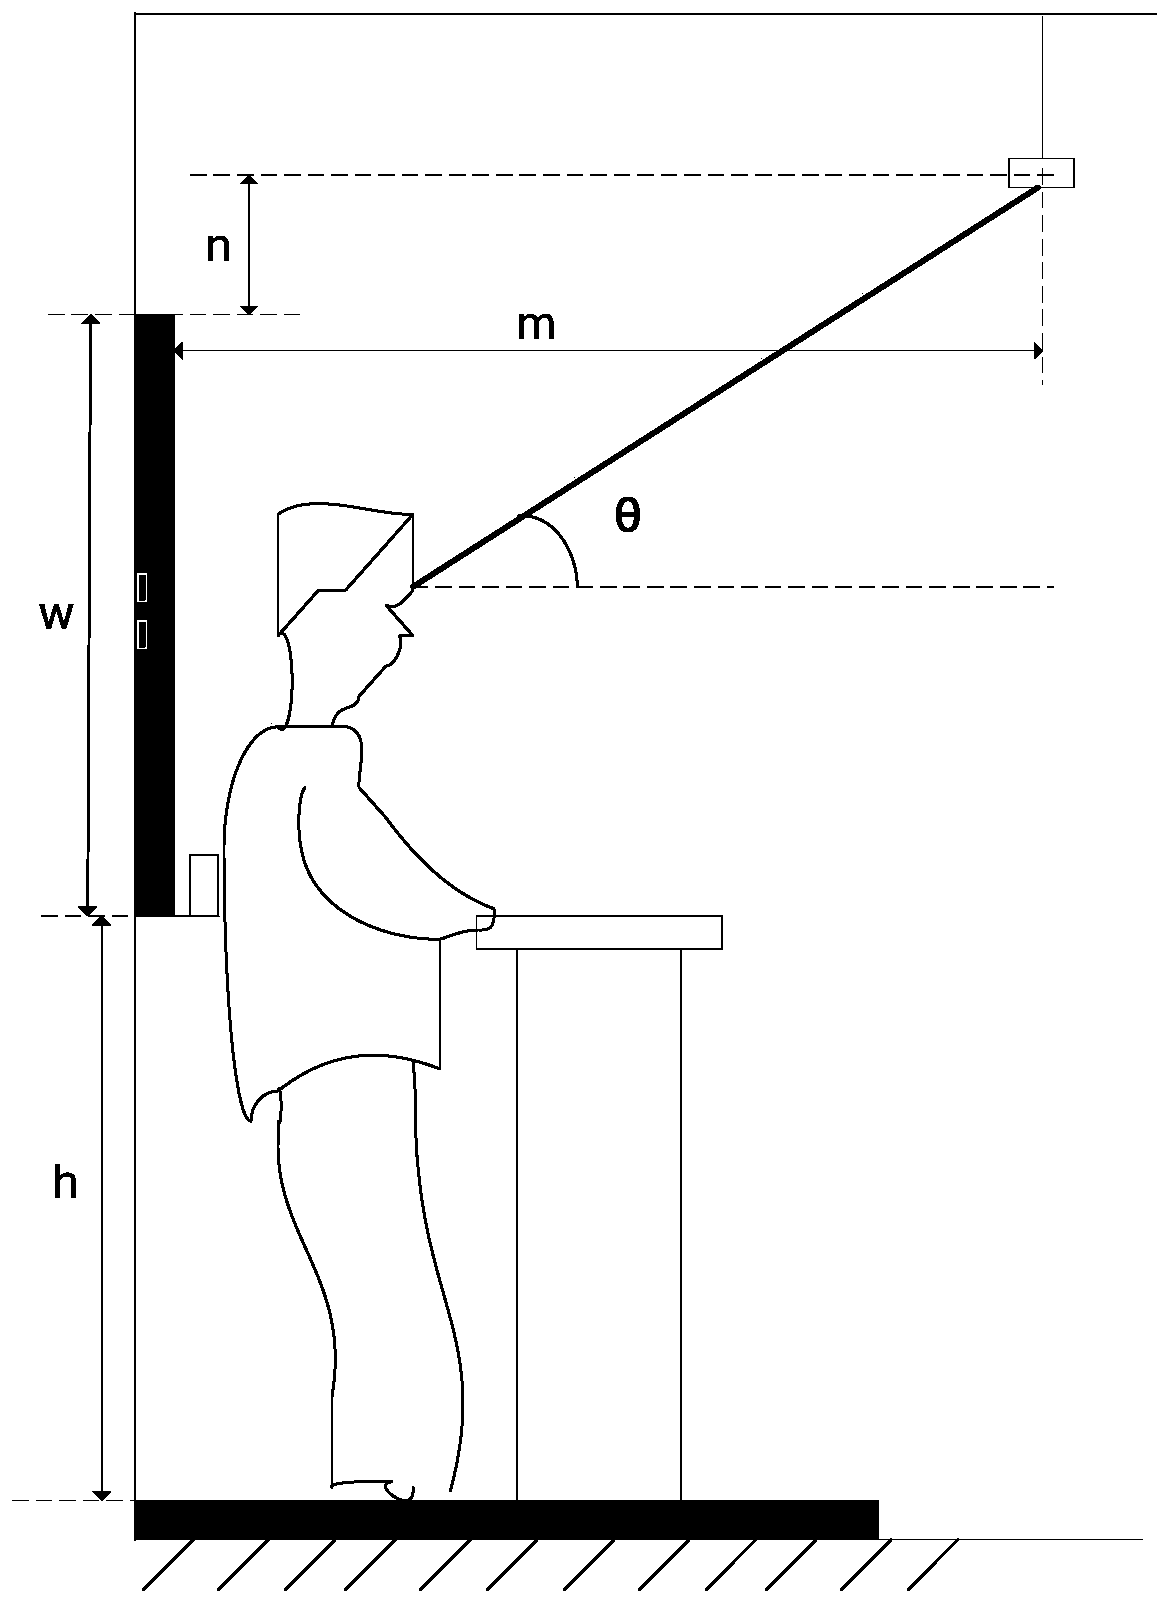 Anti-glare mounting method for a classroom LED blackboard lamp